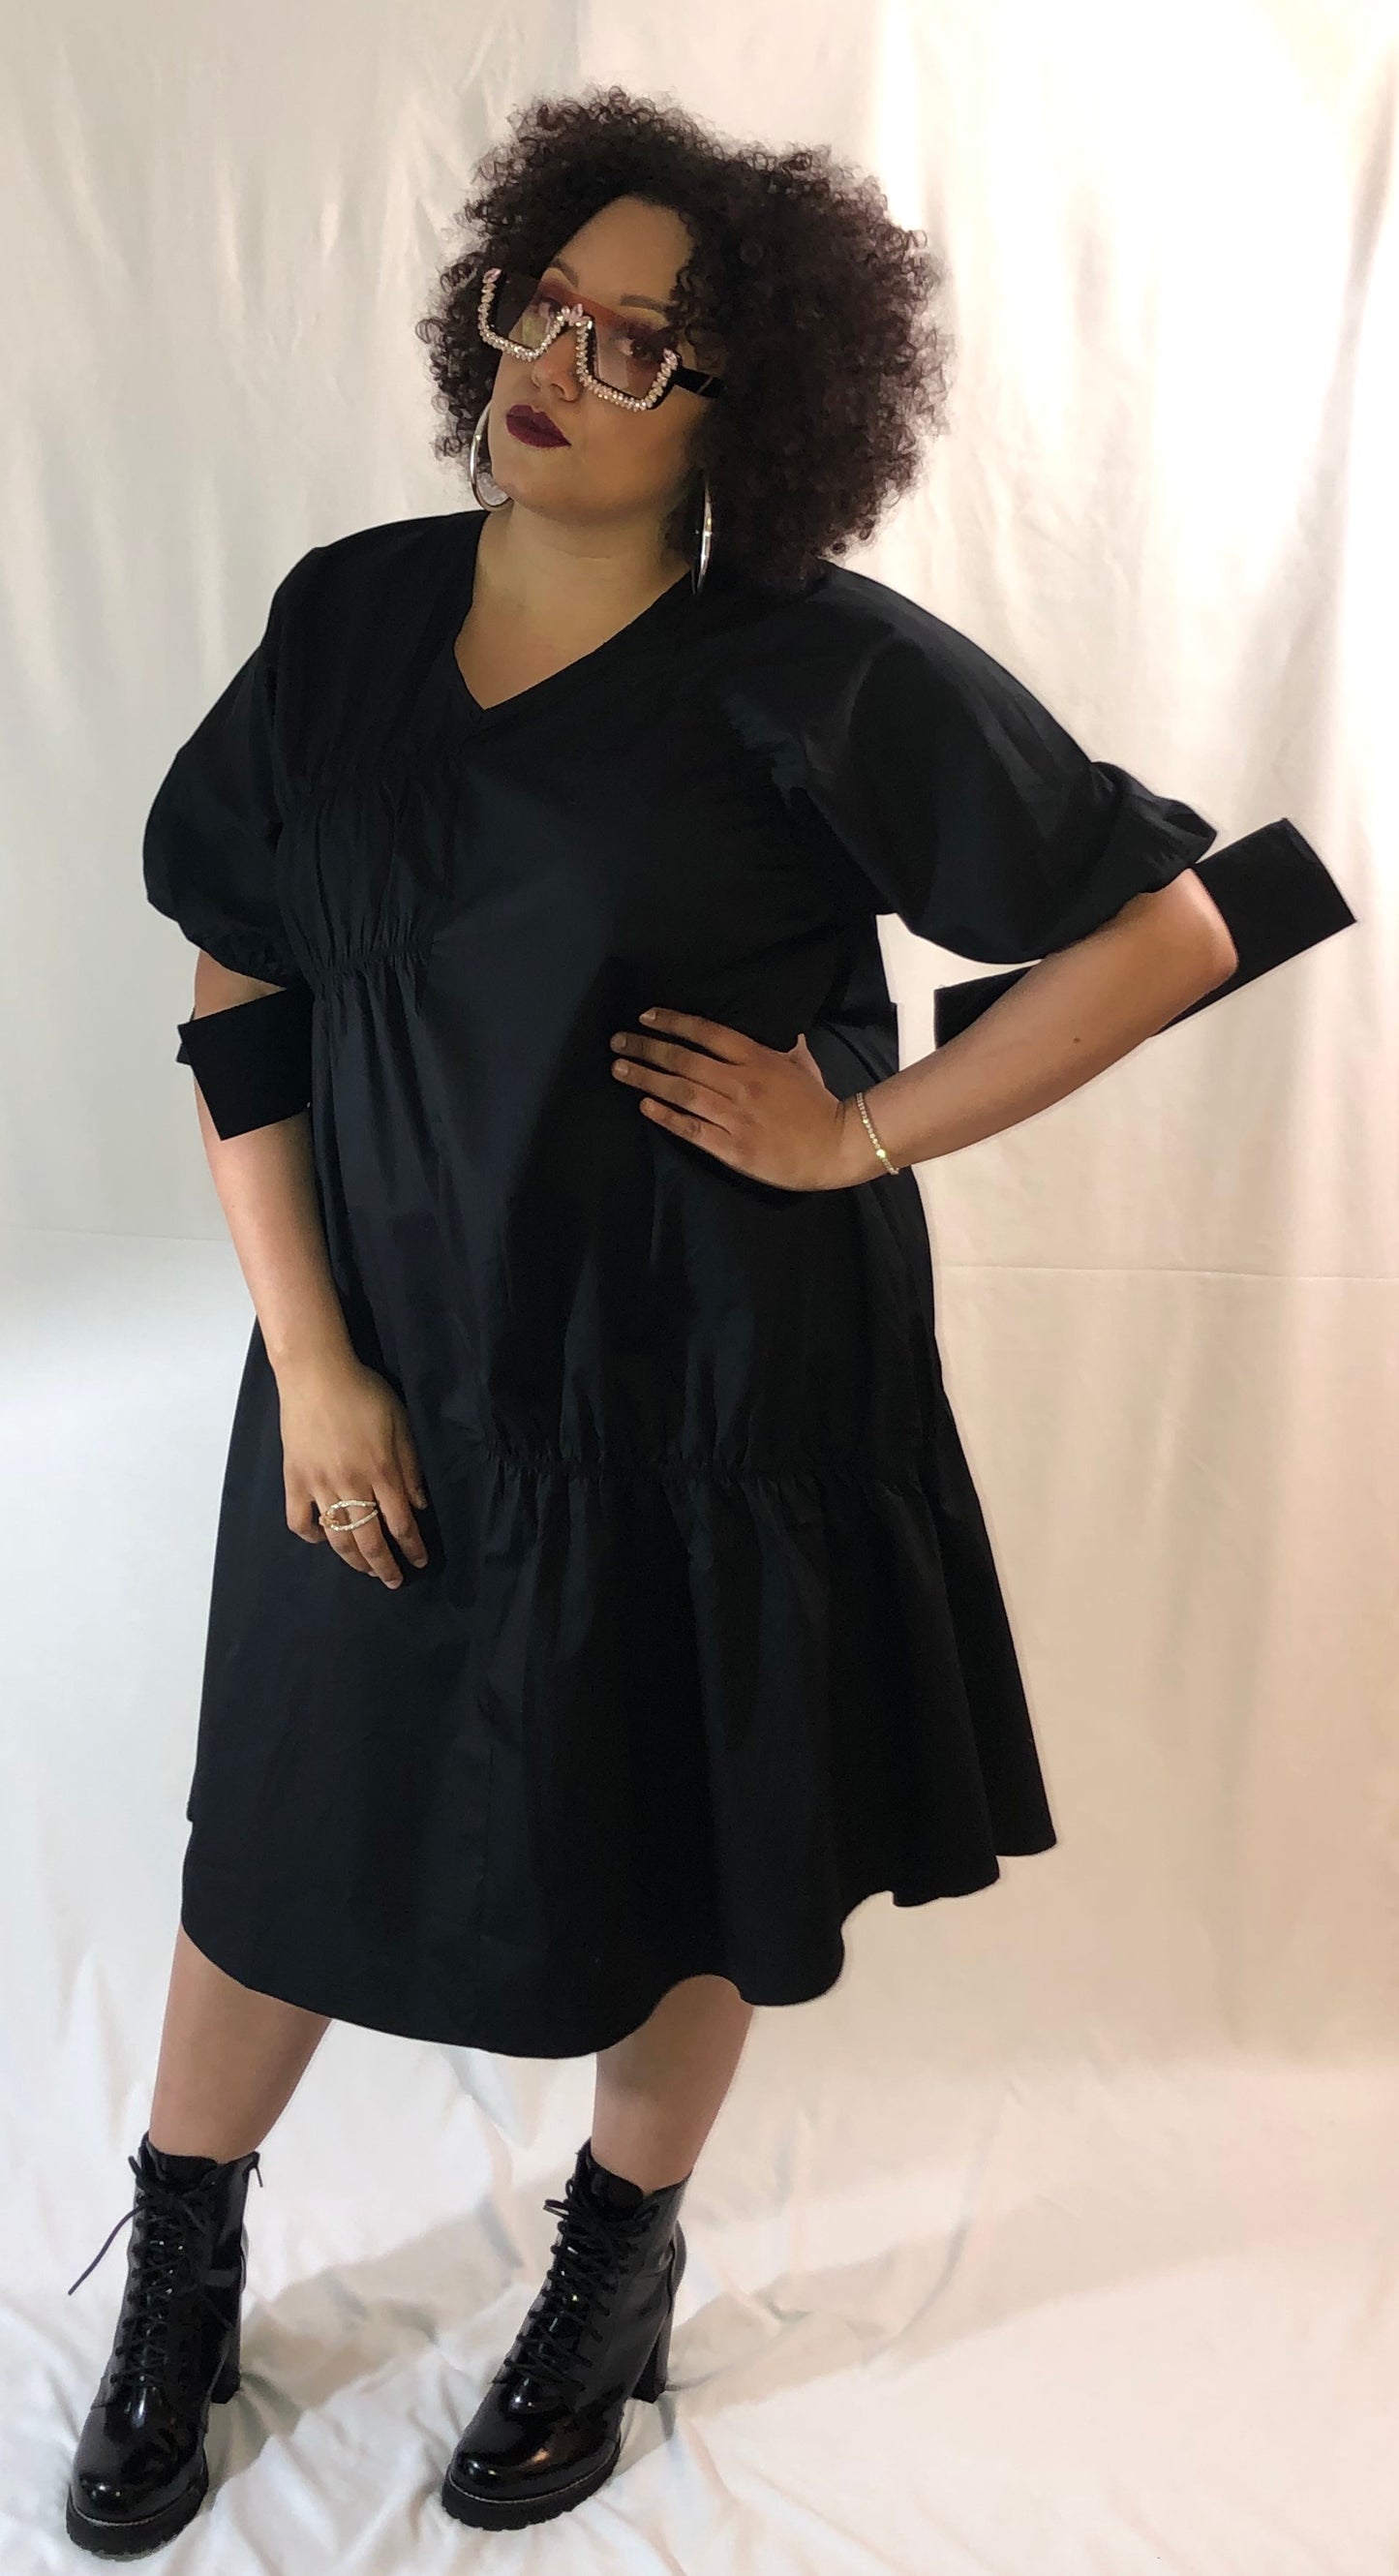 Sassy Black Dress